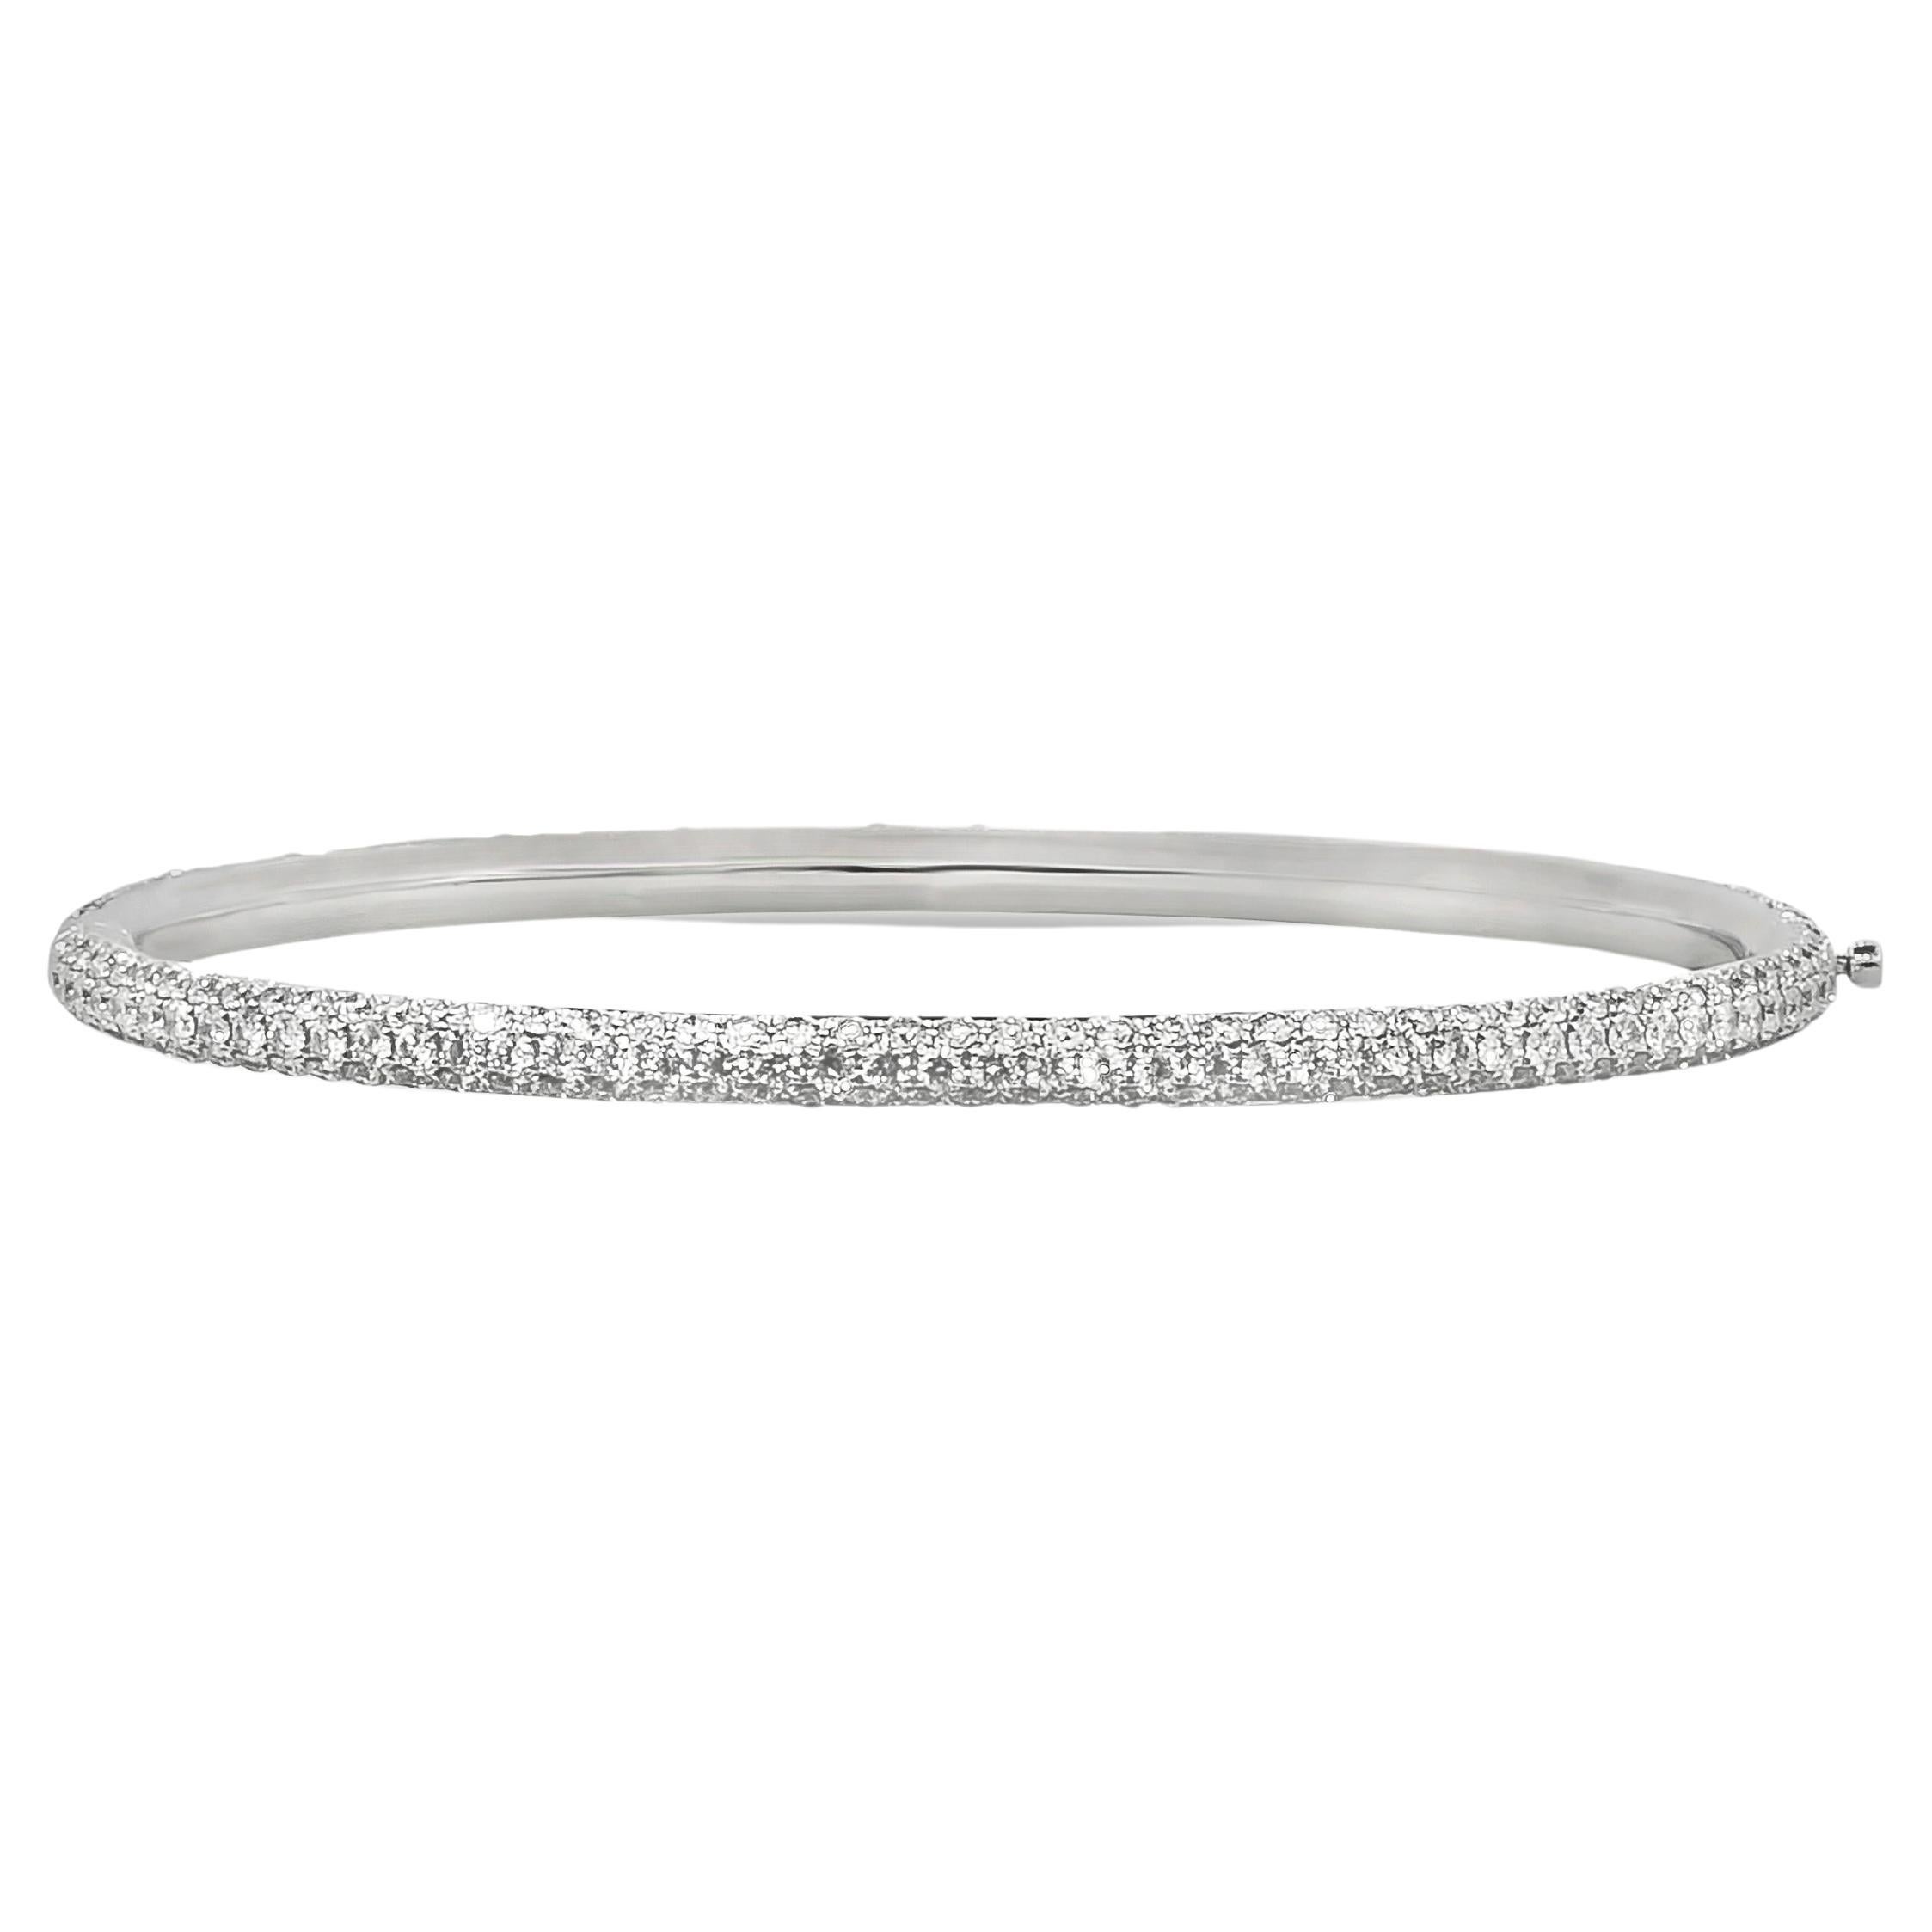 Roman Malakov 4.76 Carat Total Round Cut Diamond Eternity Bangle Bracelet For Sale